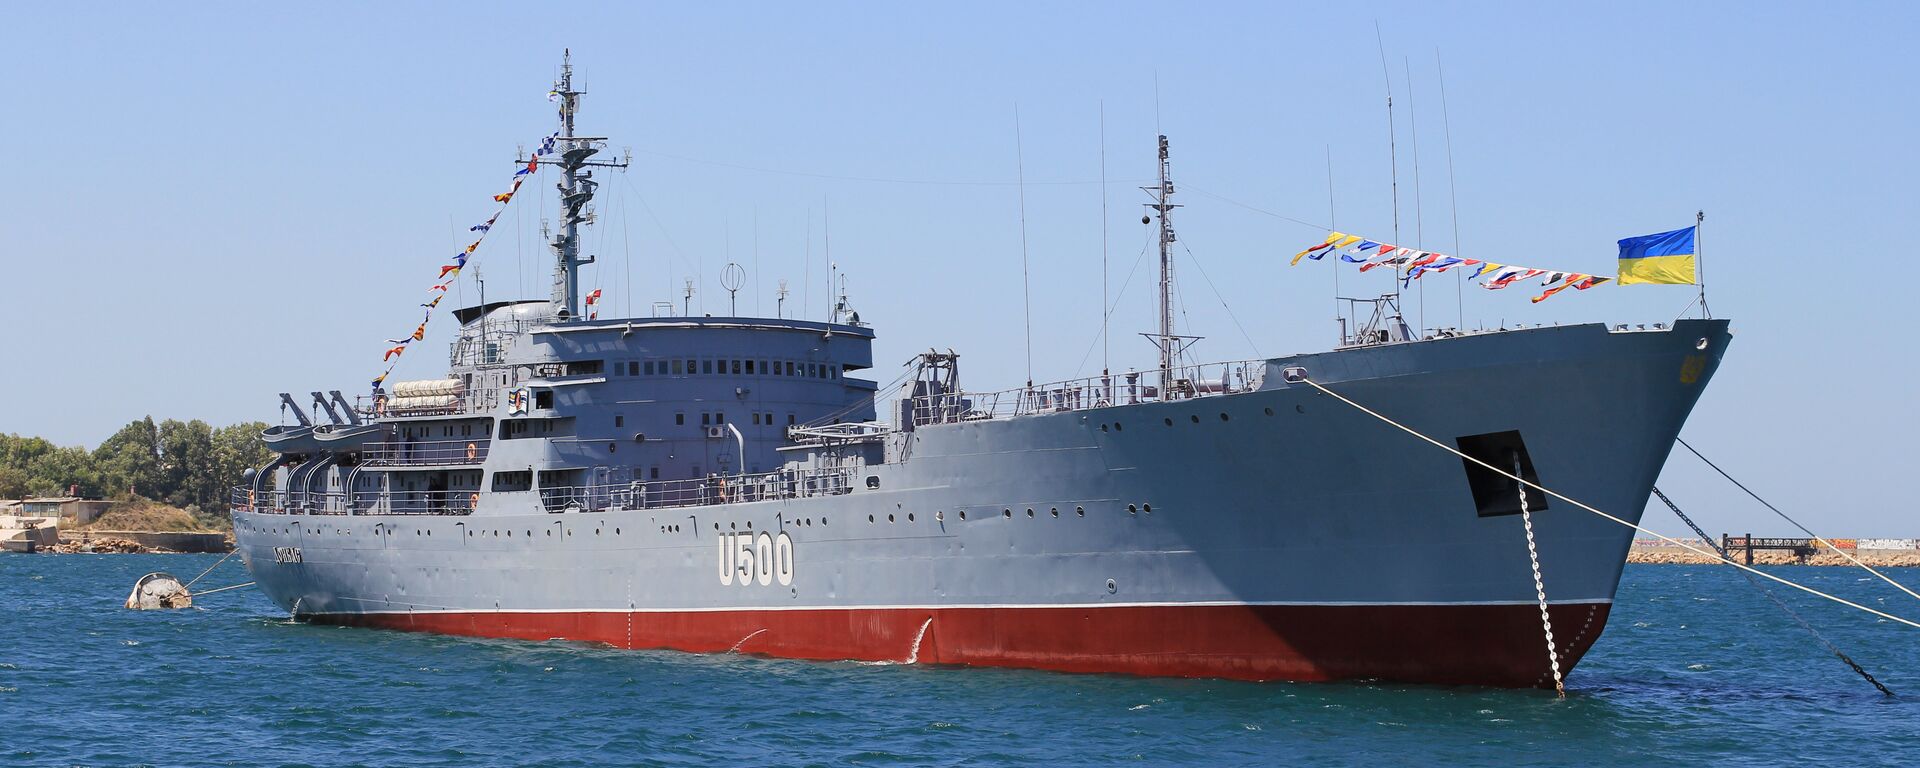 Brod ukrajinske ratne mornarice U500 Donbas - Sputnik Srbija, 1920, 10.12.2021